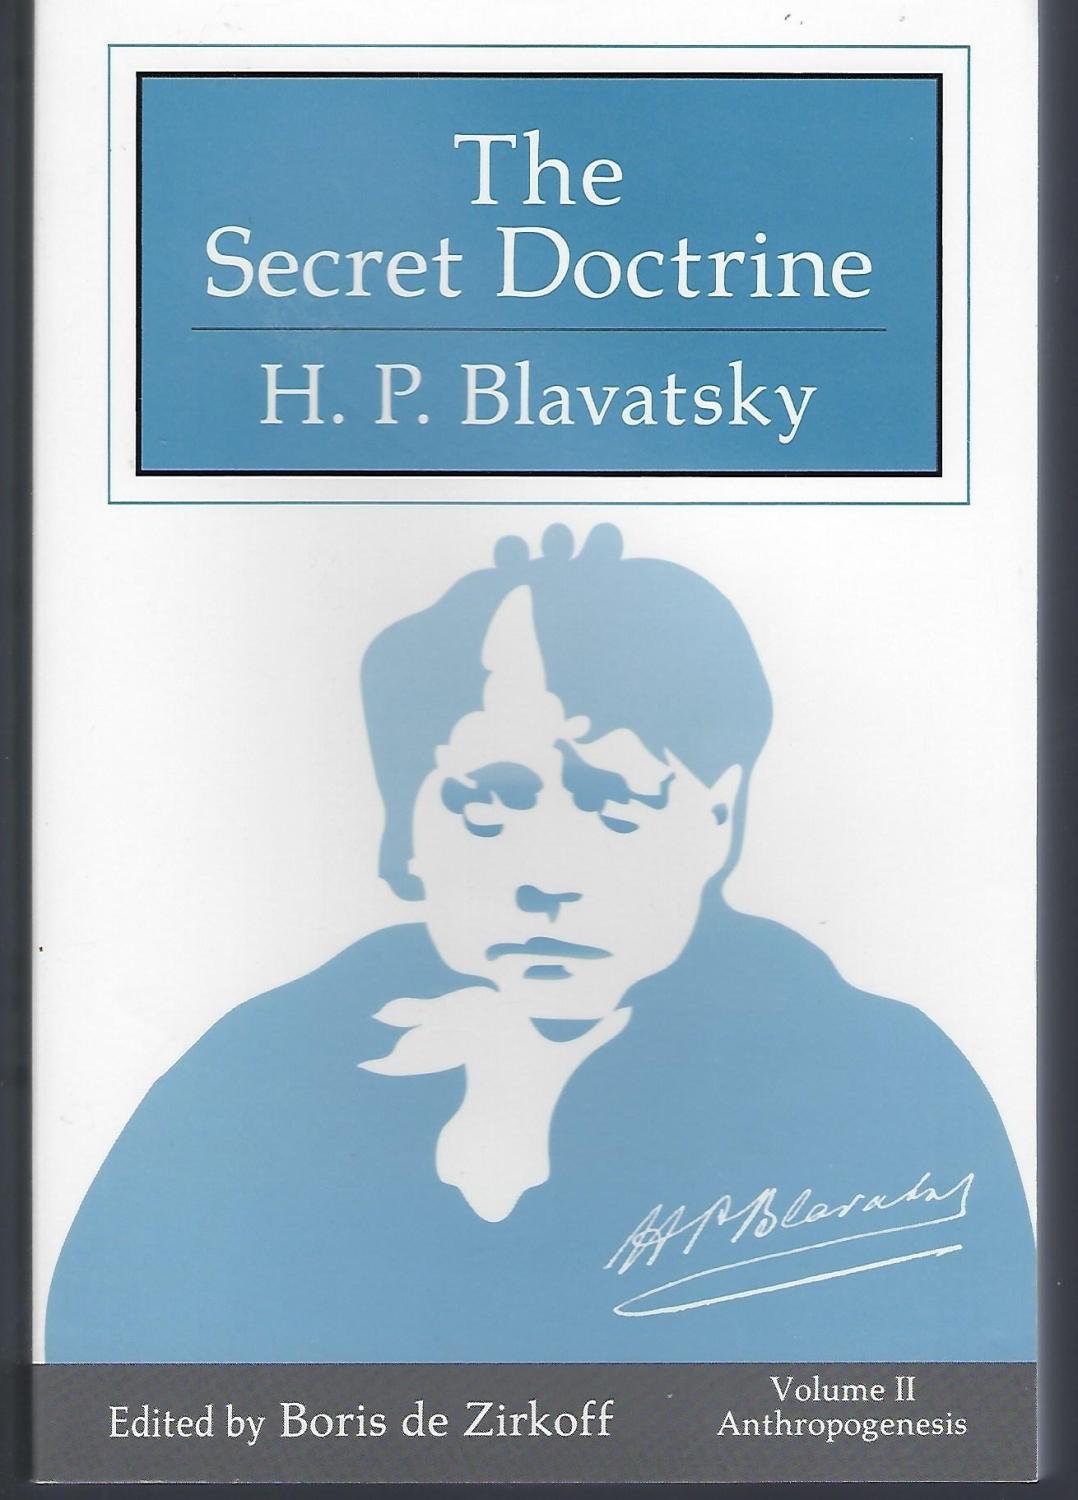 The Secret Doctrine: Vol. II - Anthropogenesis - Blavatsky, H. P.